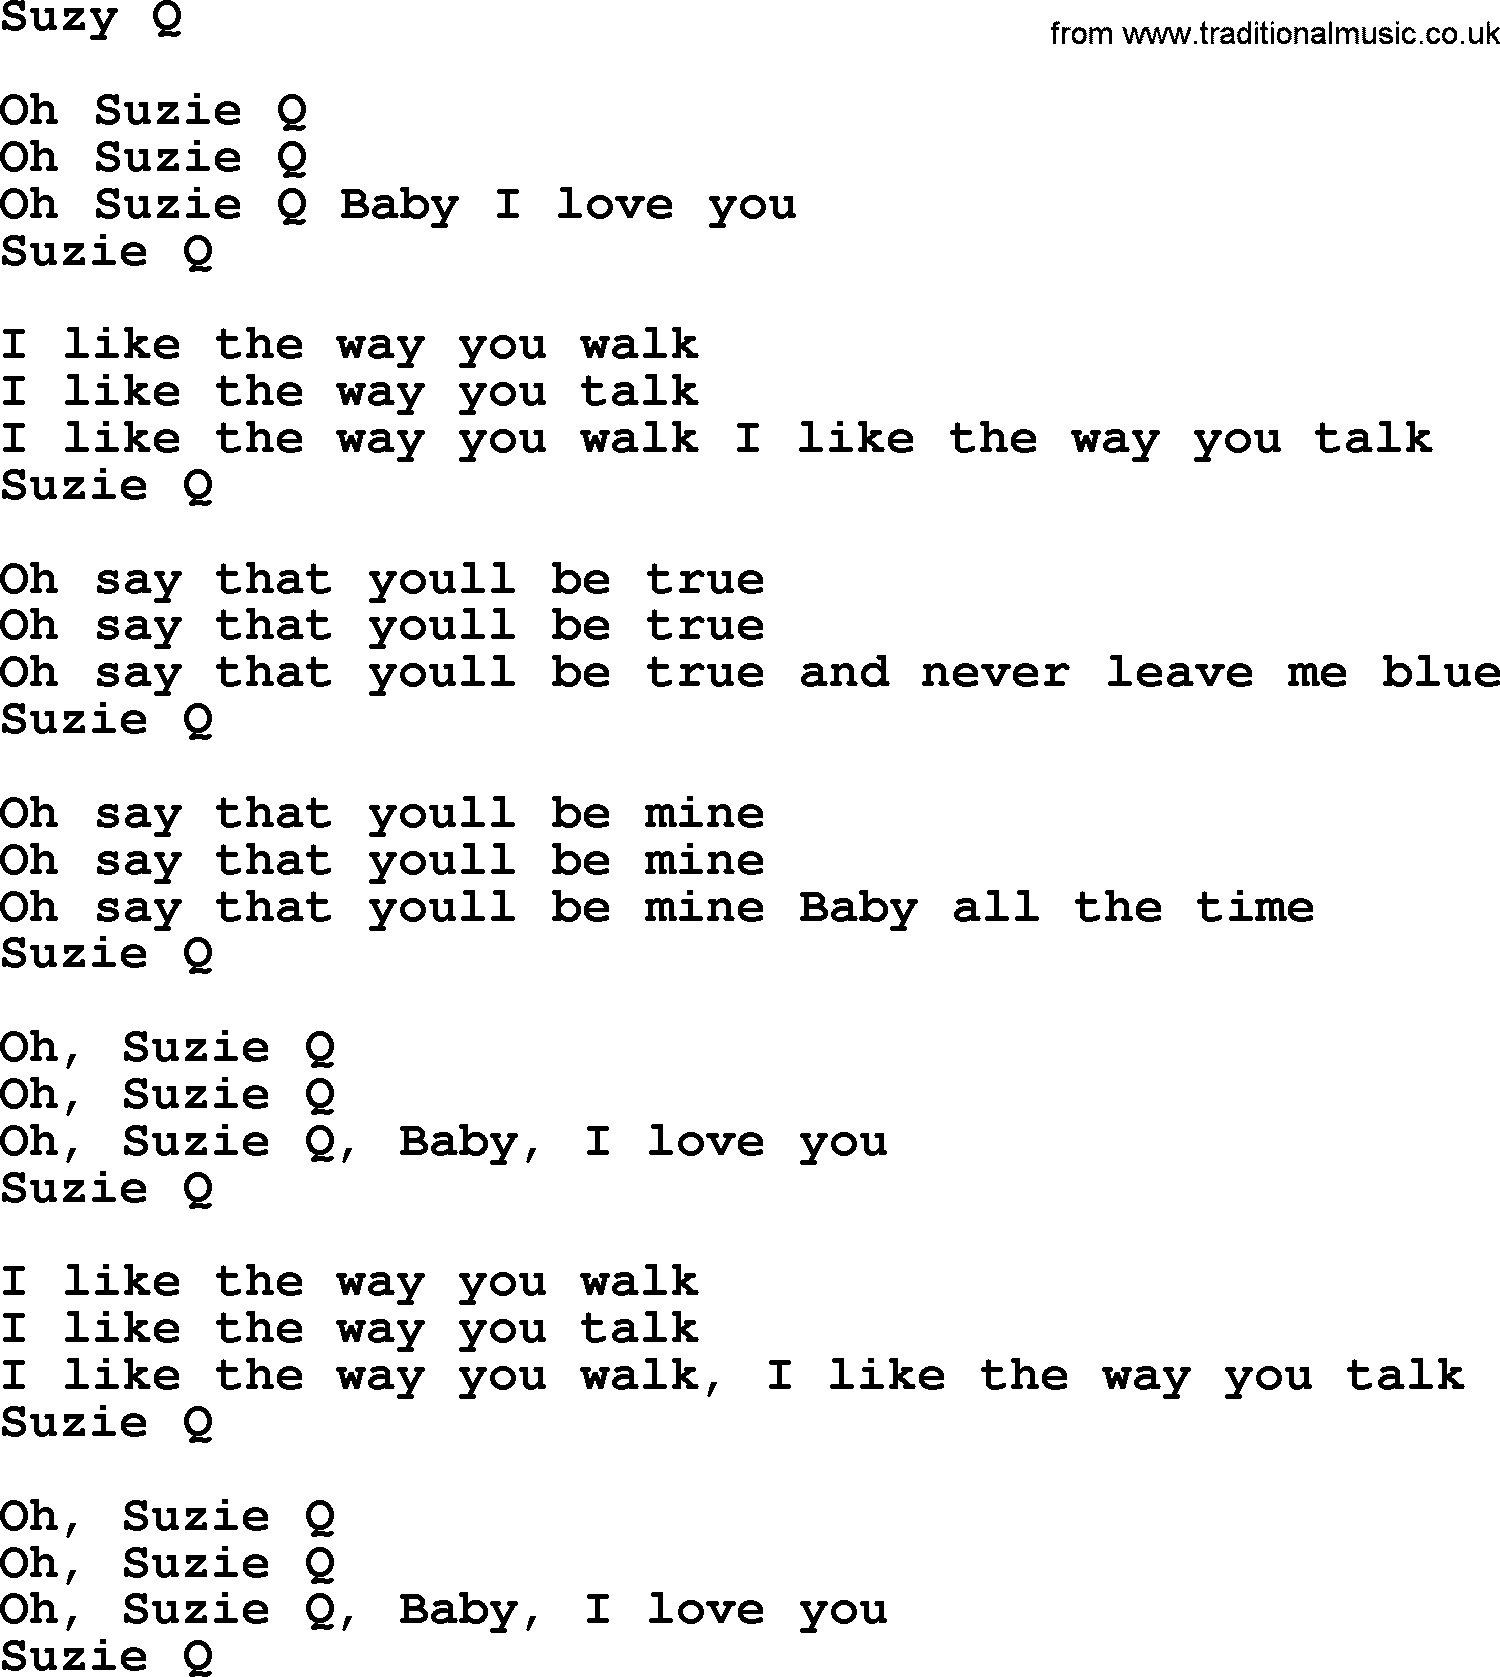 The Byrds song Suzy Q, lyrics